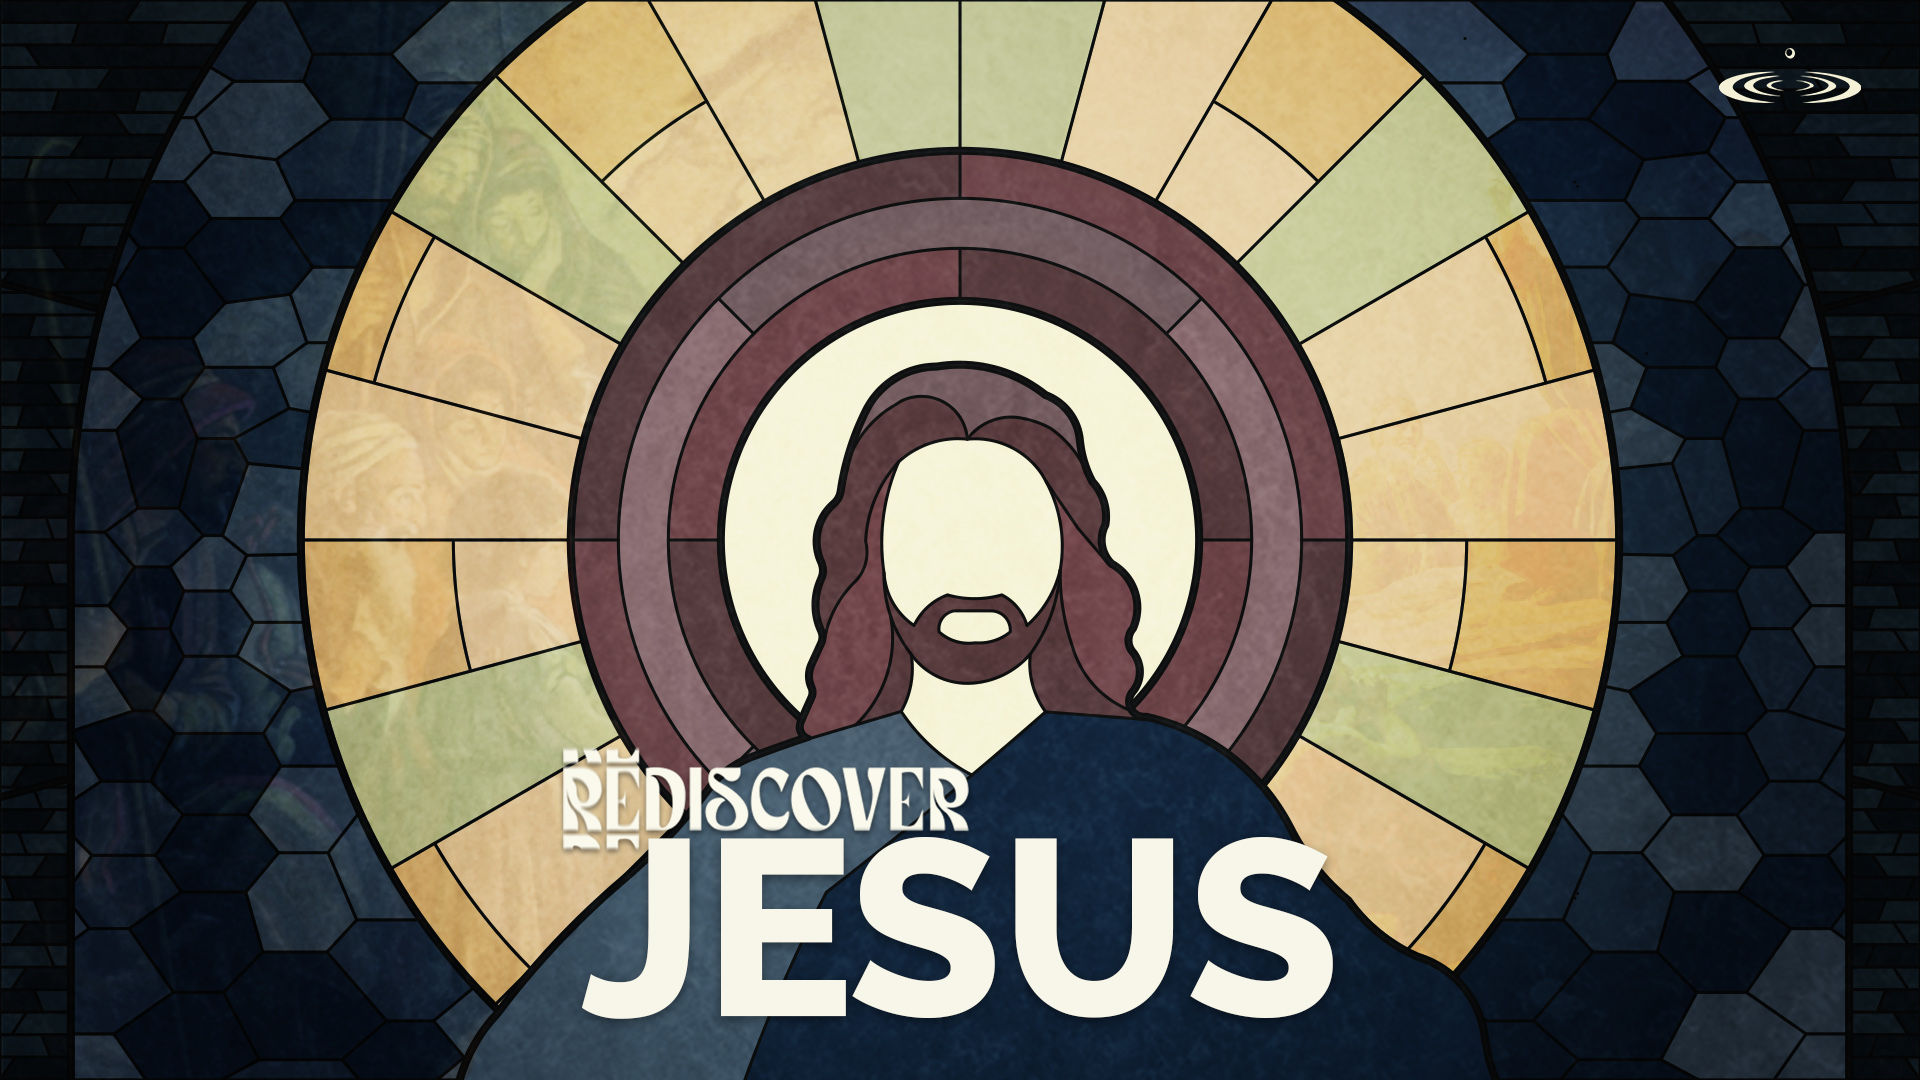 Rediscover Jesus, Part 2: “Jesus’ Rejected”